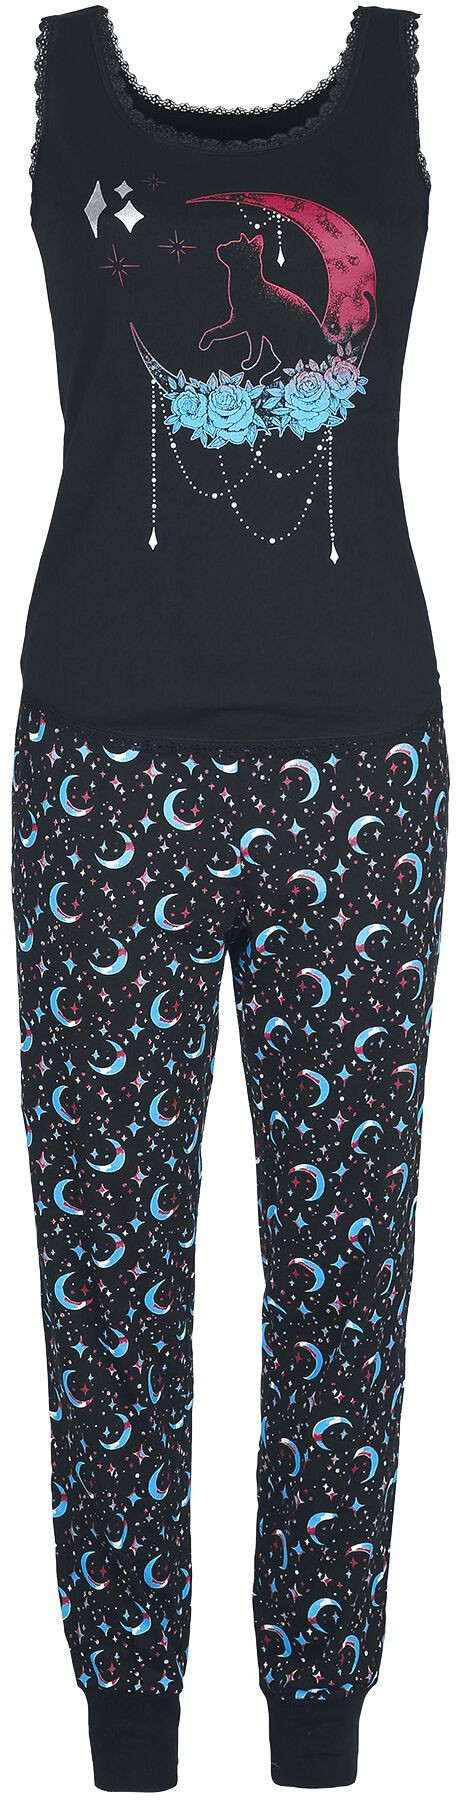 Full Volume by EMP Pyjama set with moon print Pyjama black